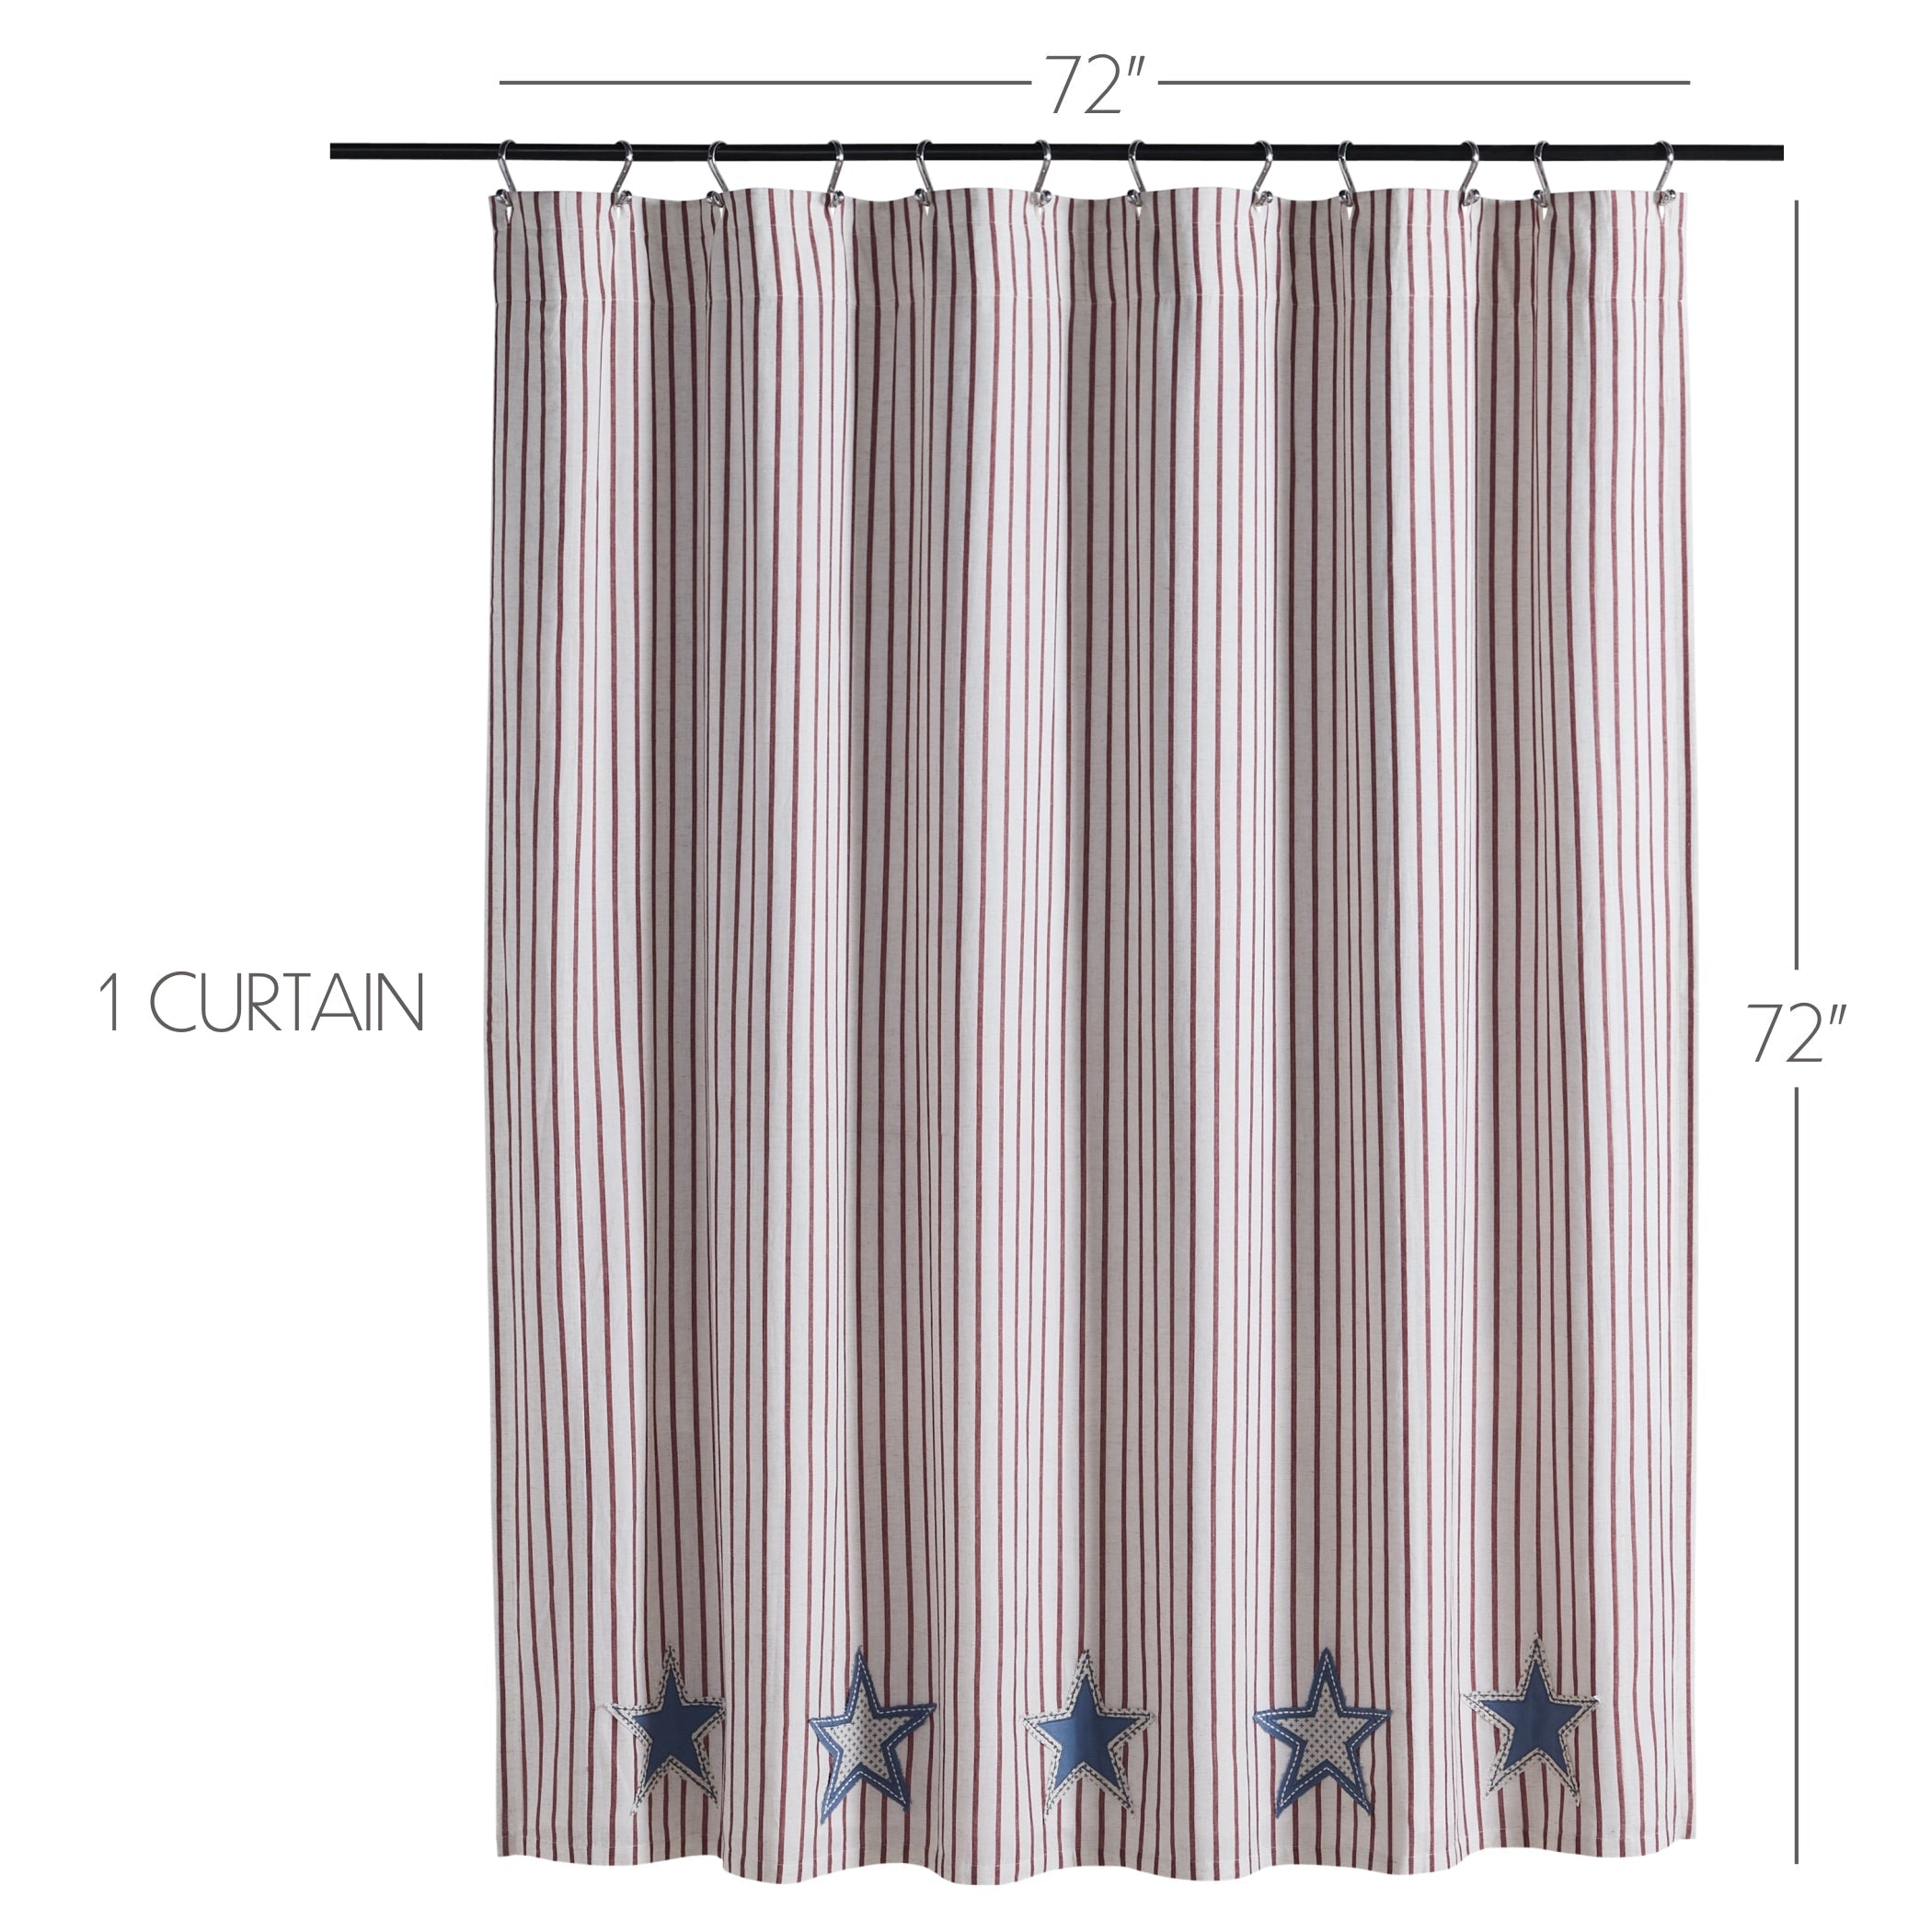 Celebration Applique Star Shower Curtain 72"x72" VHC Brands